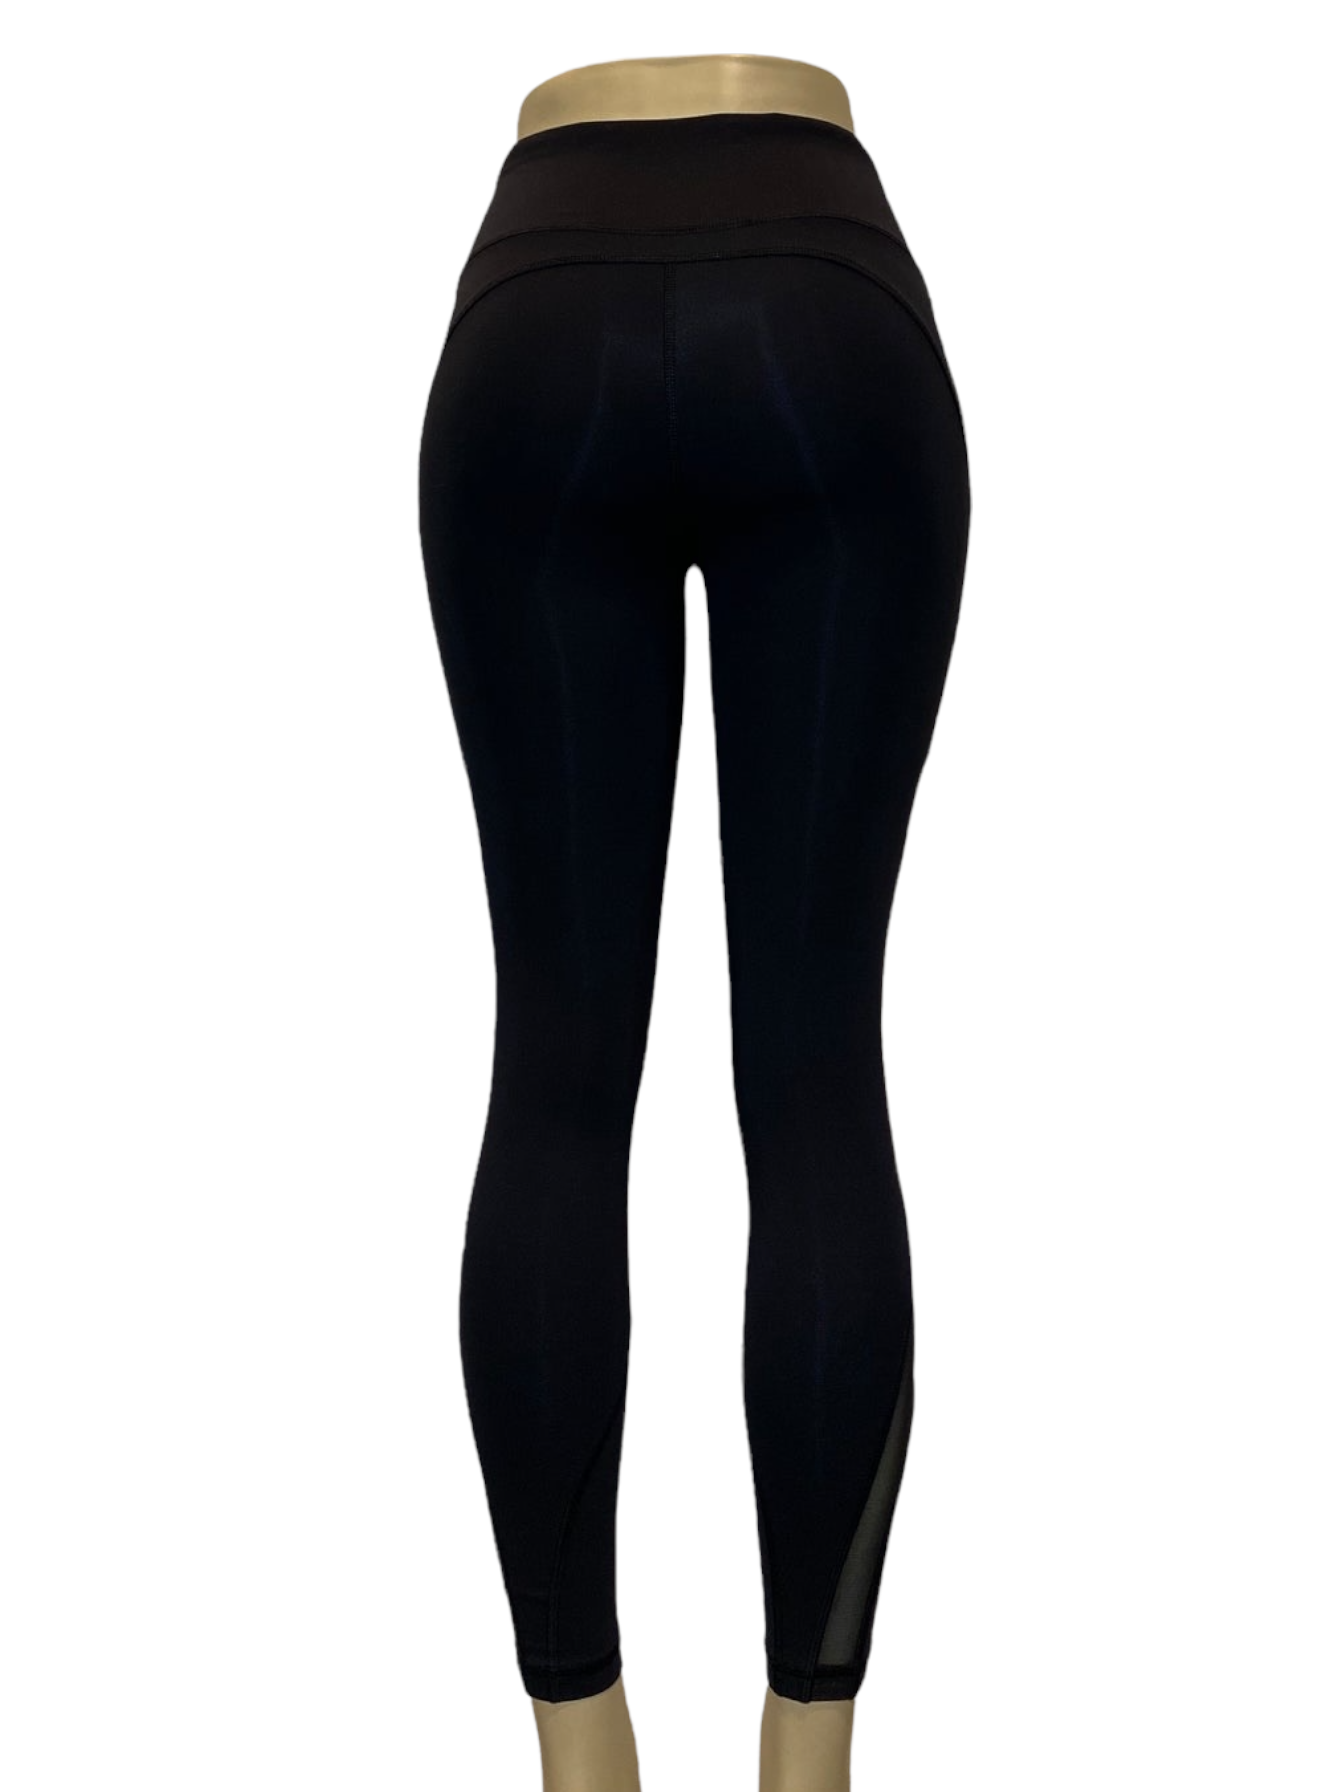 Rare Lululemon Invigorate 7/8 Tight Leggings Front Zip Pockets Sheer Detail Size 6 - Love it again boutique